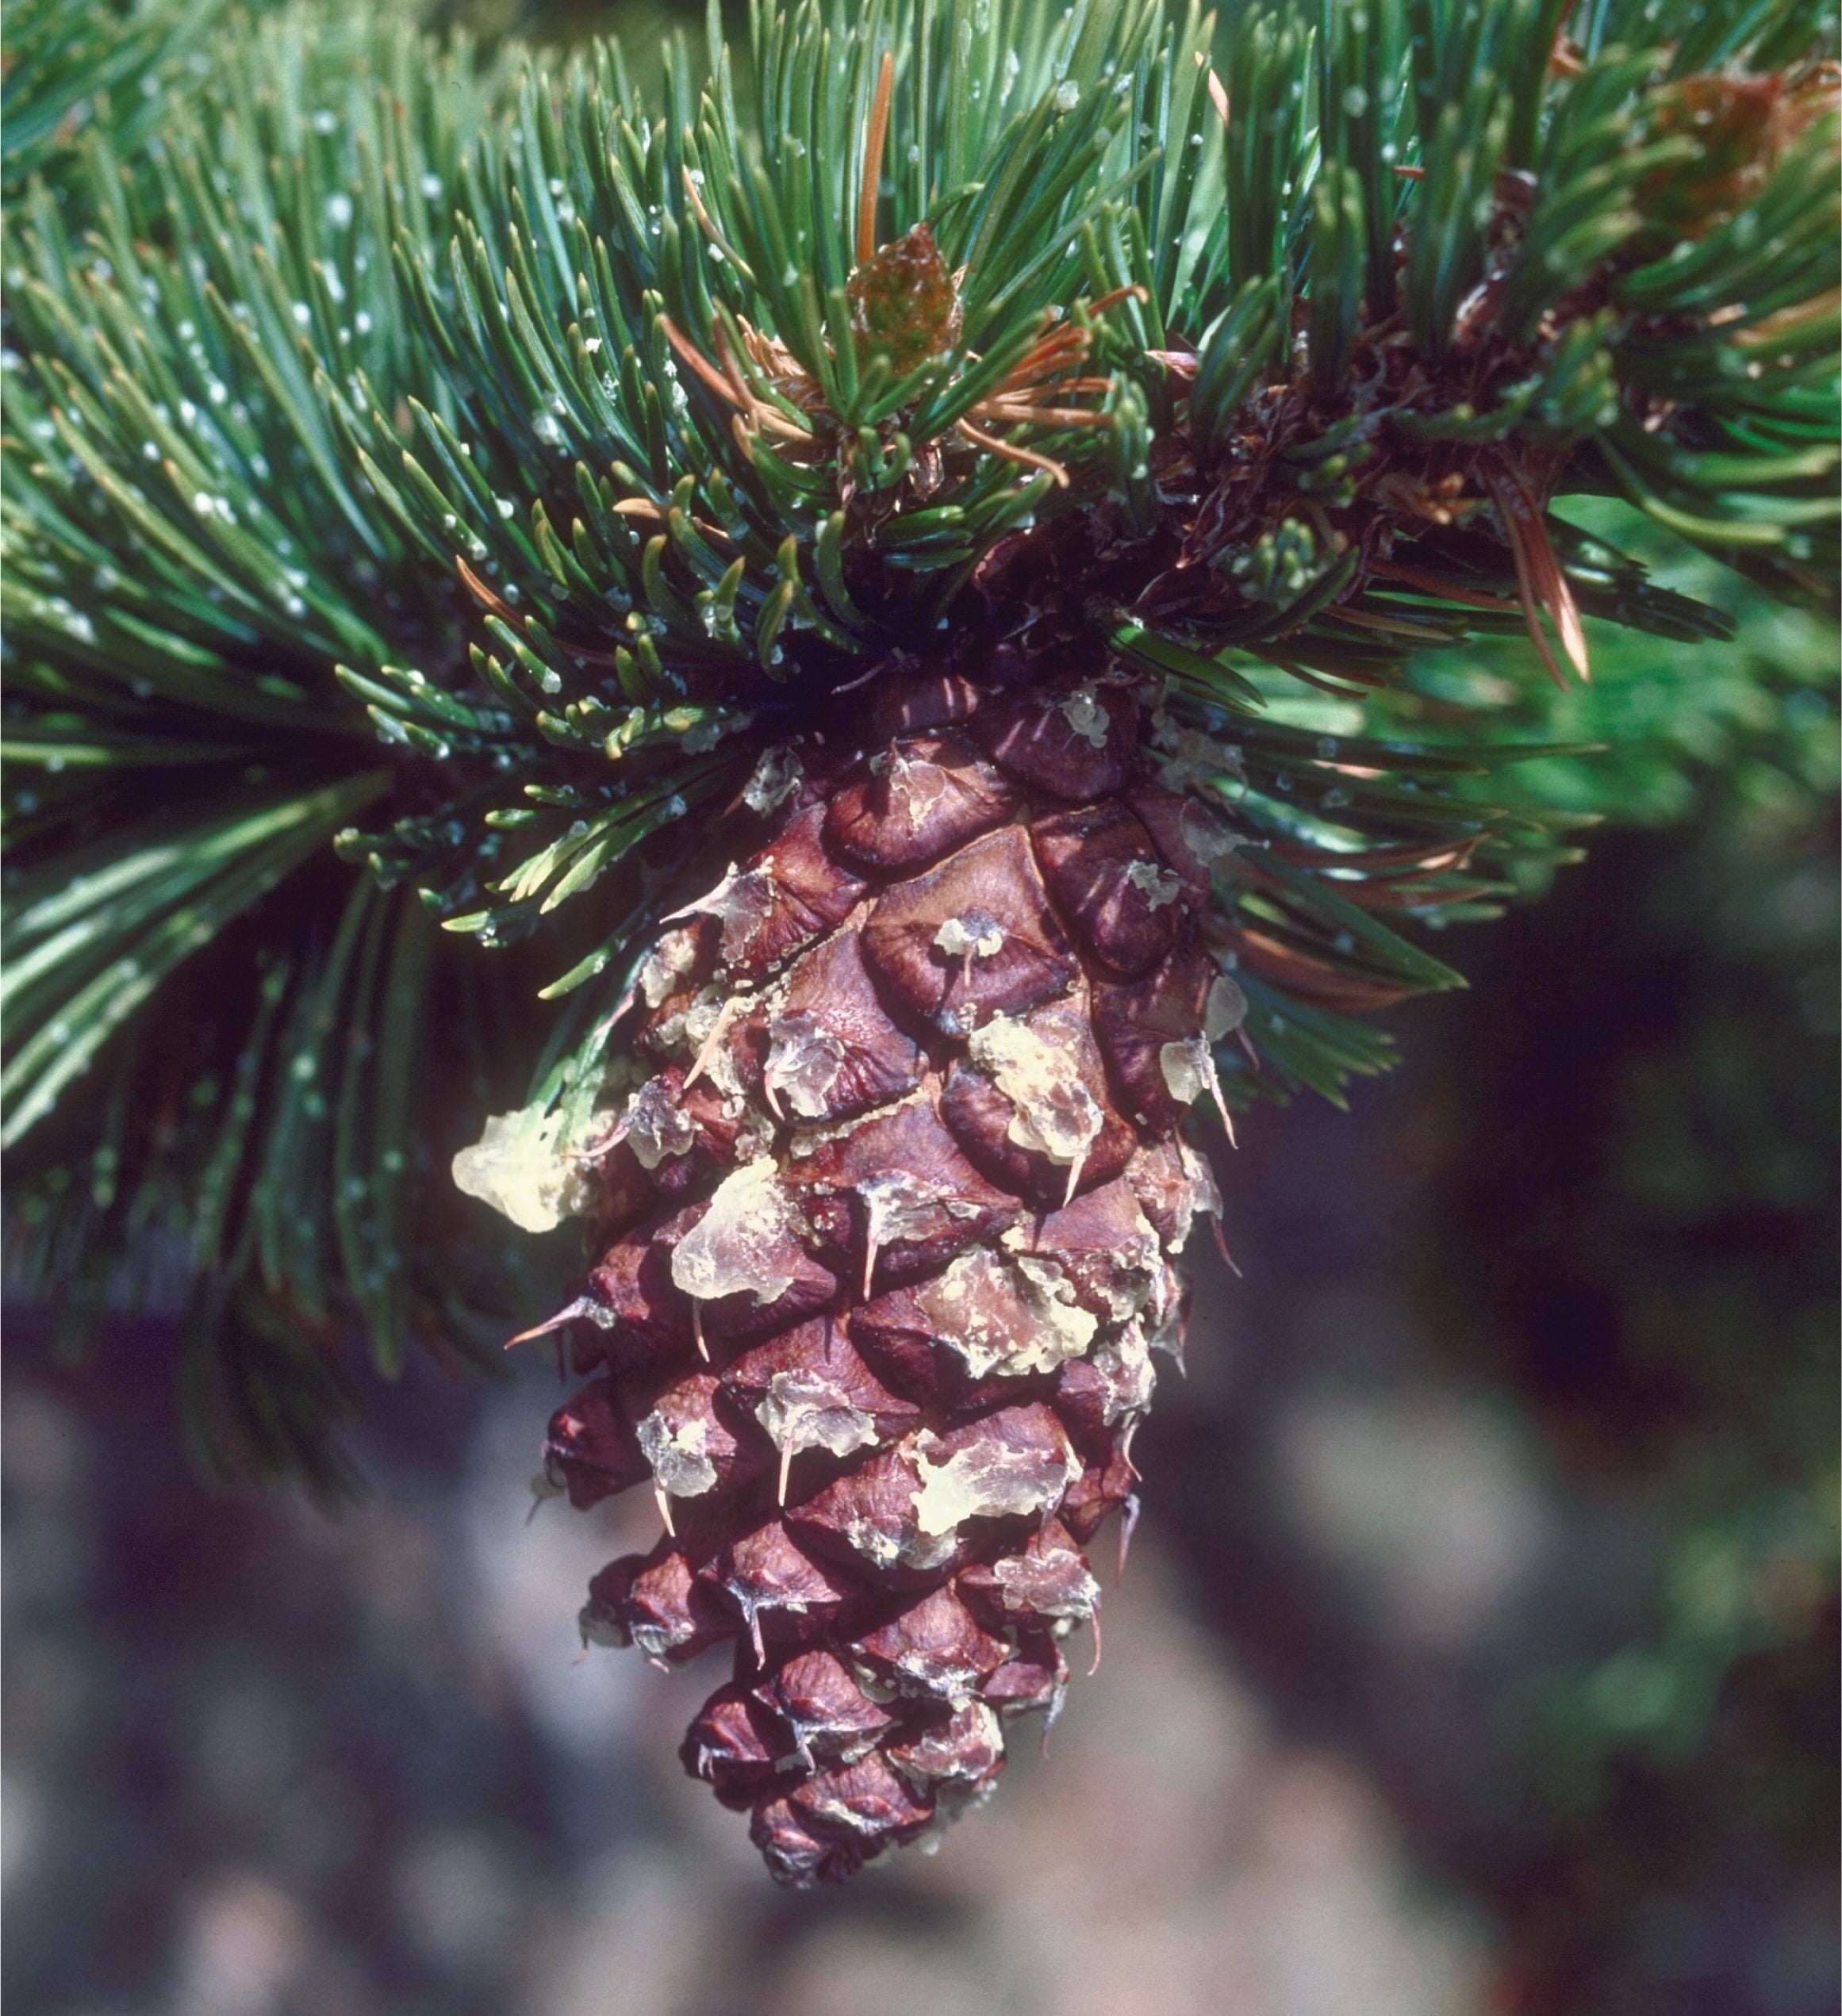 Ancient Bristlecone Pine Seed Grow Kit